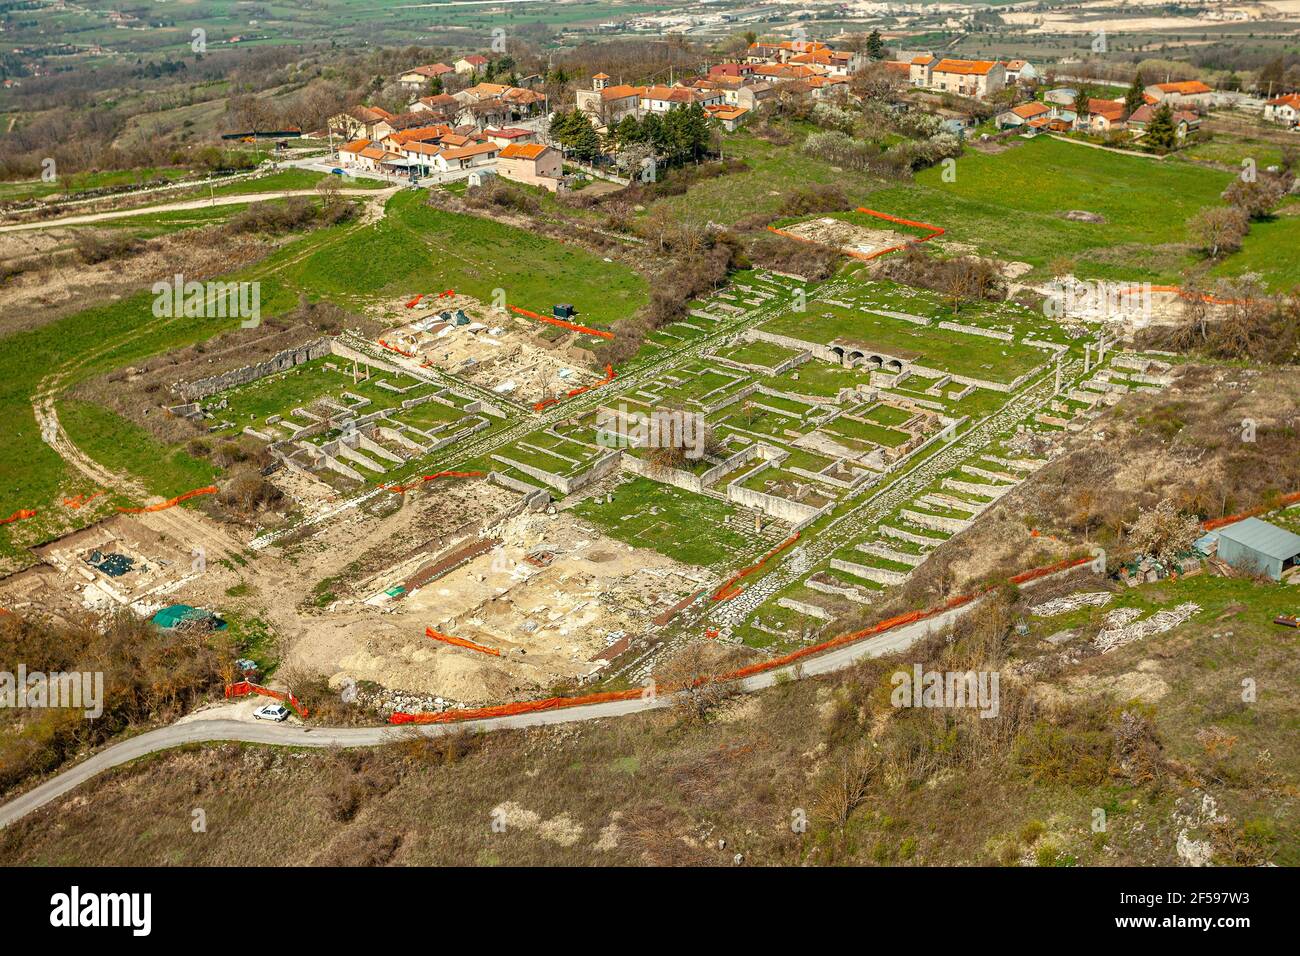 Vista aérea del sitio arqueológico del siglo IV a.C. Alba Fucens en Abruzzo. Massa d'Albe, provincia de L'Aquila, Abruzos, Italia, Europa Foto de stock